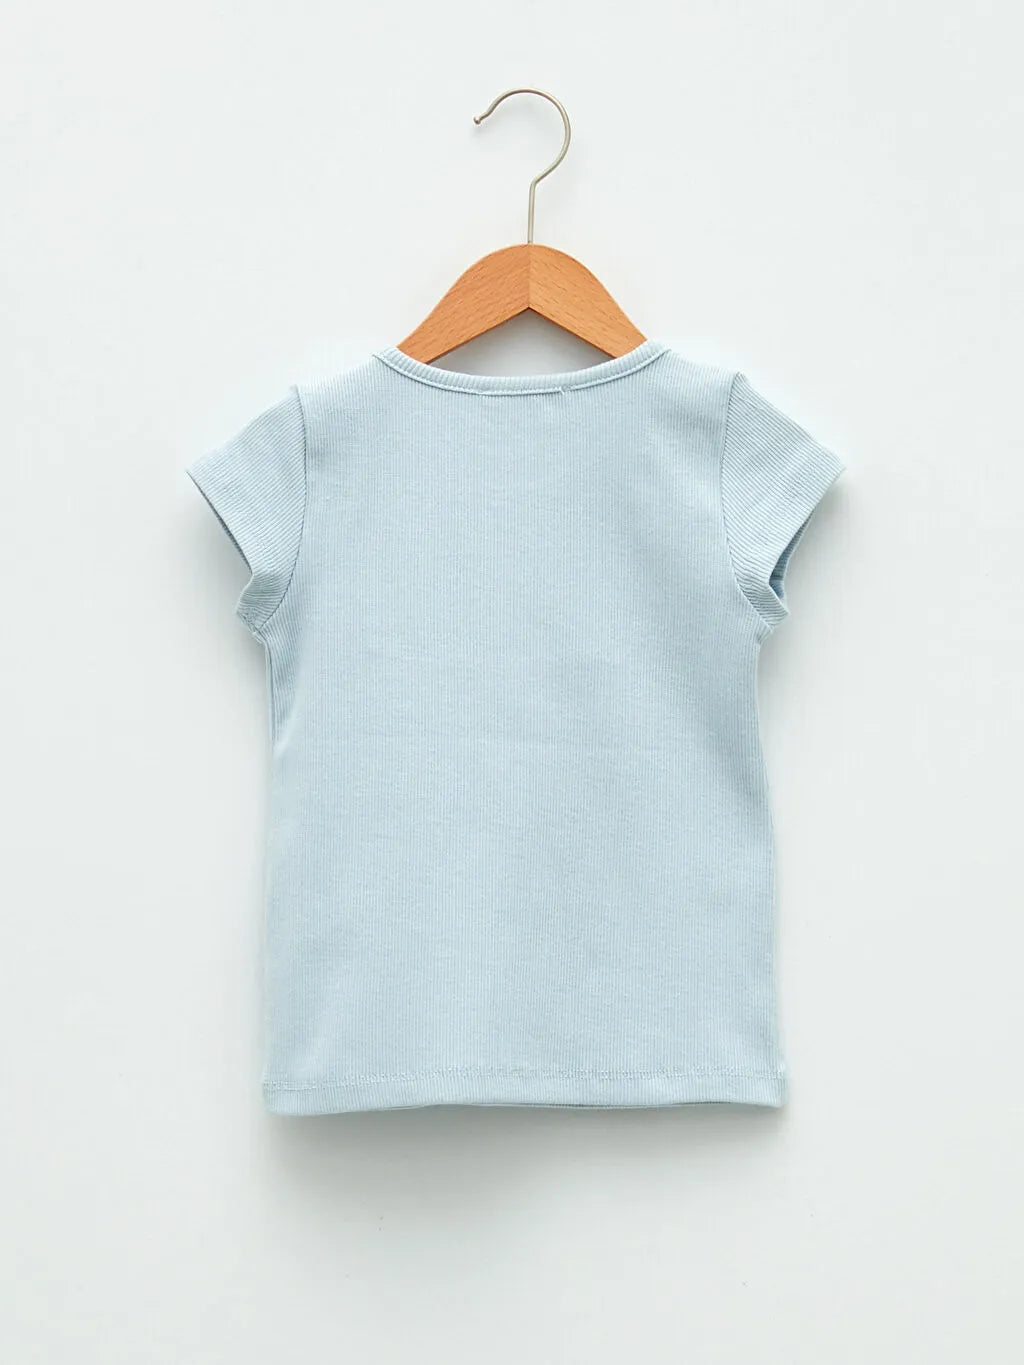 Crew Neck Scalloped Detailed Short Sleeve Cotton Baby Girl T-Shirt